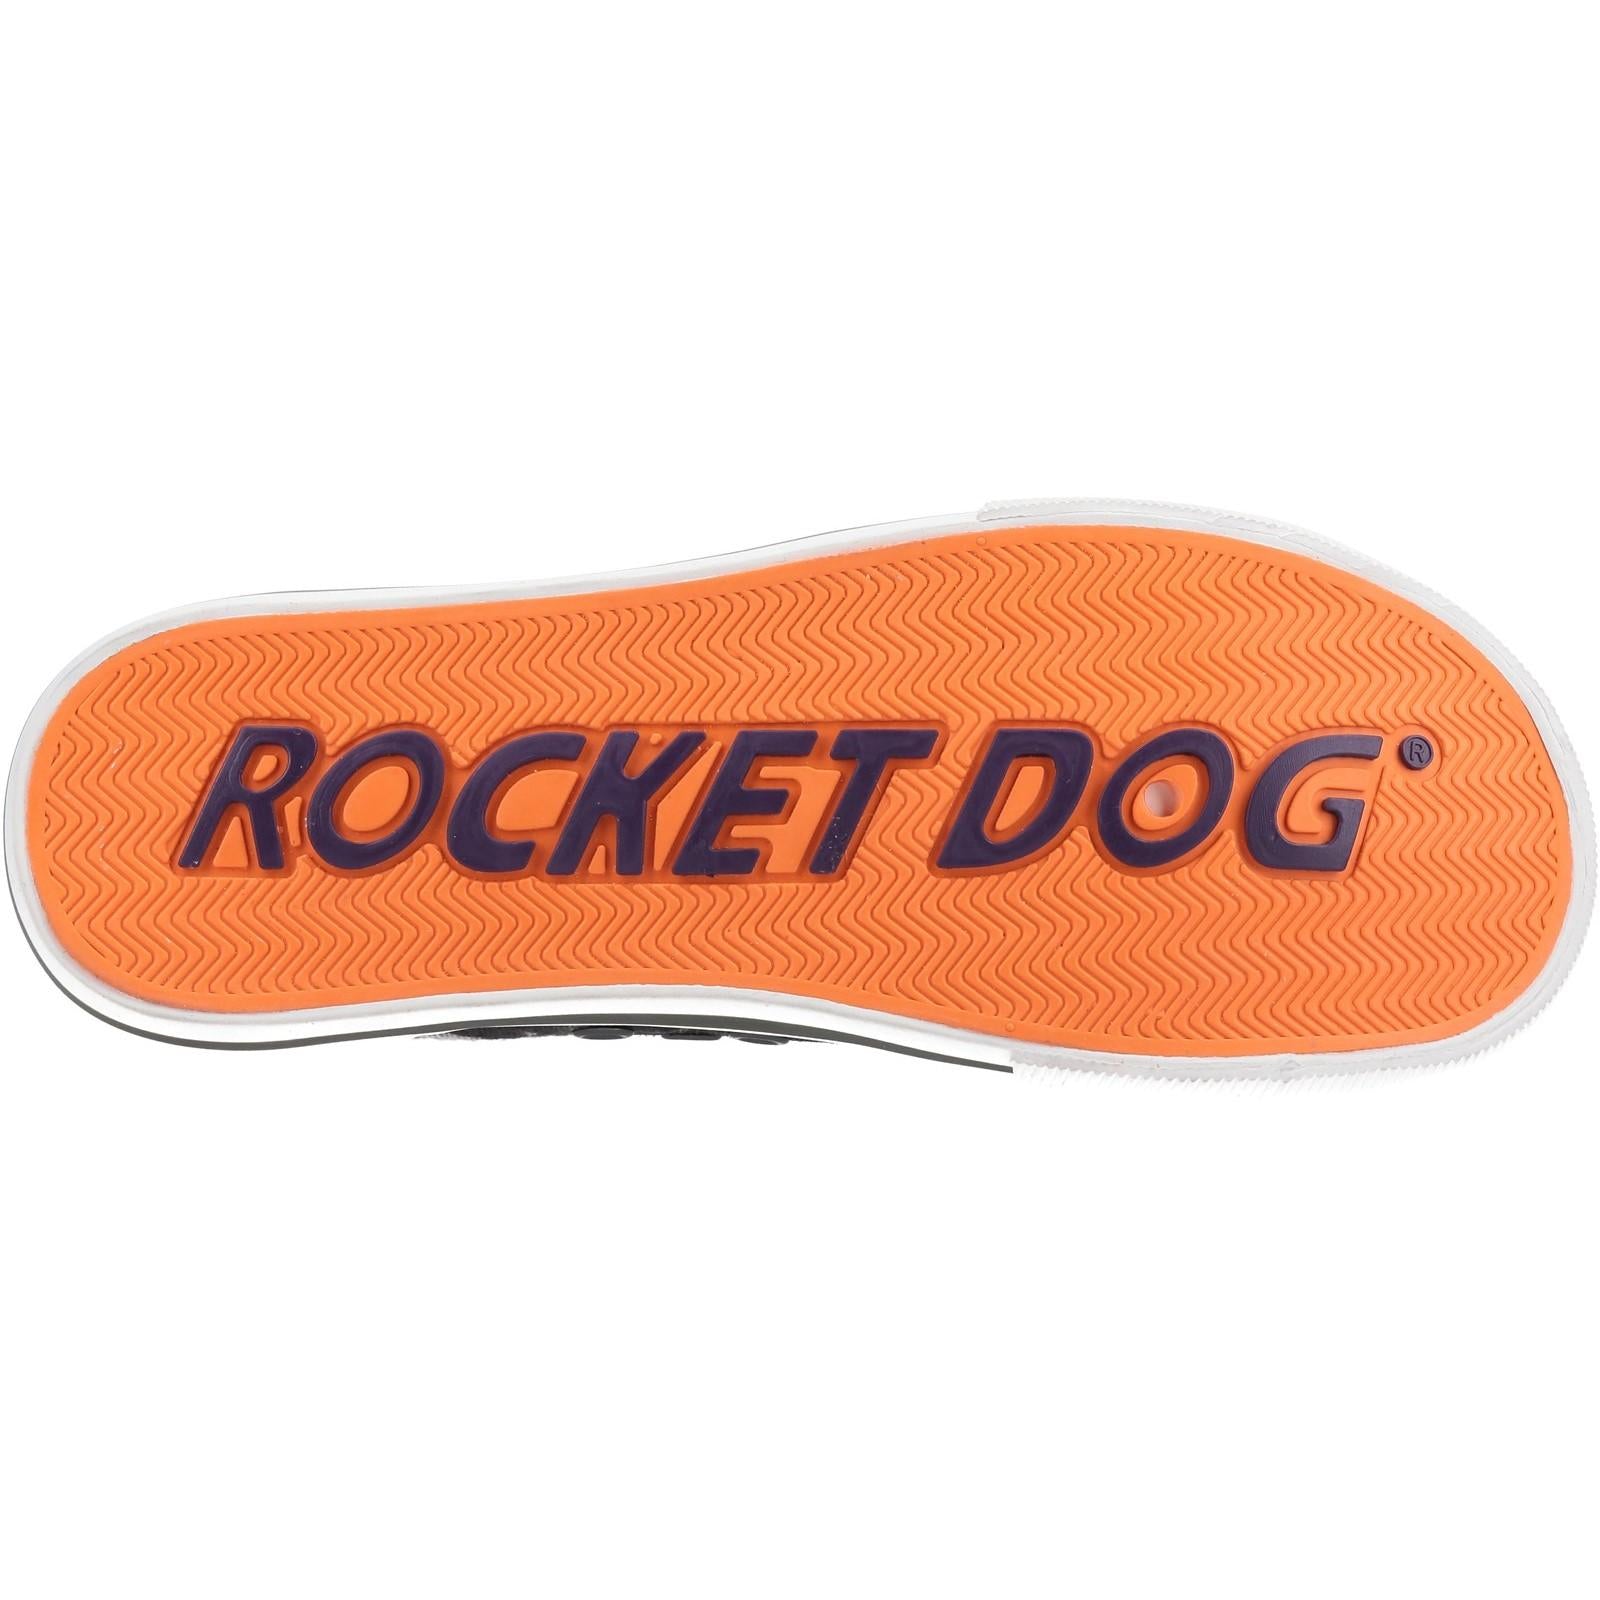 Rocket Dog Jazzin Soldier Camo Shoes